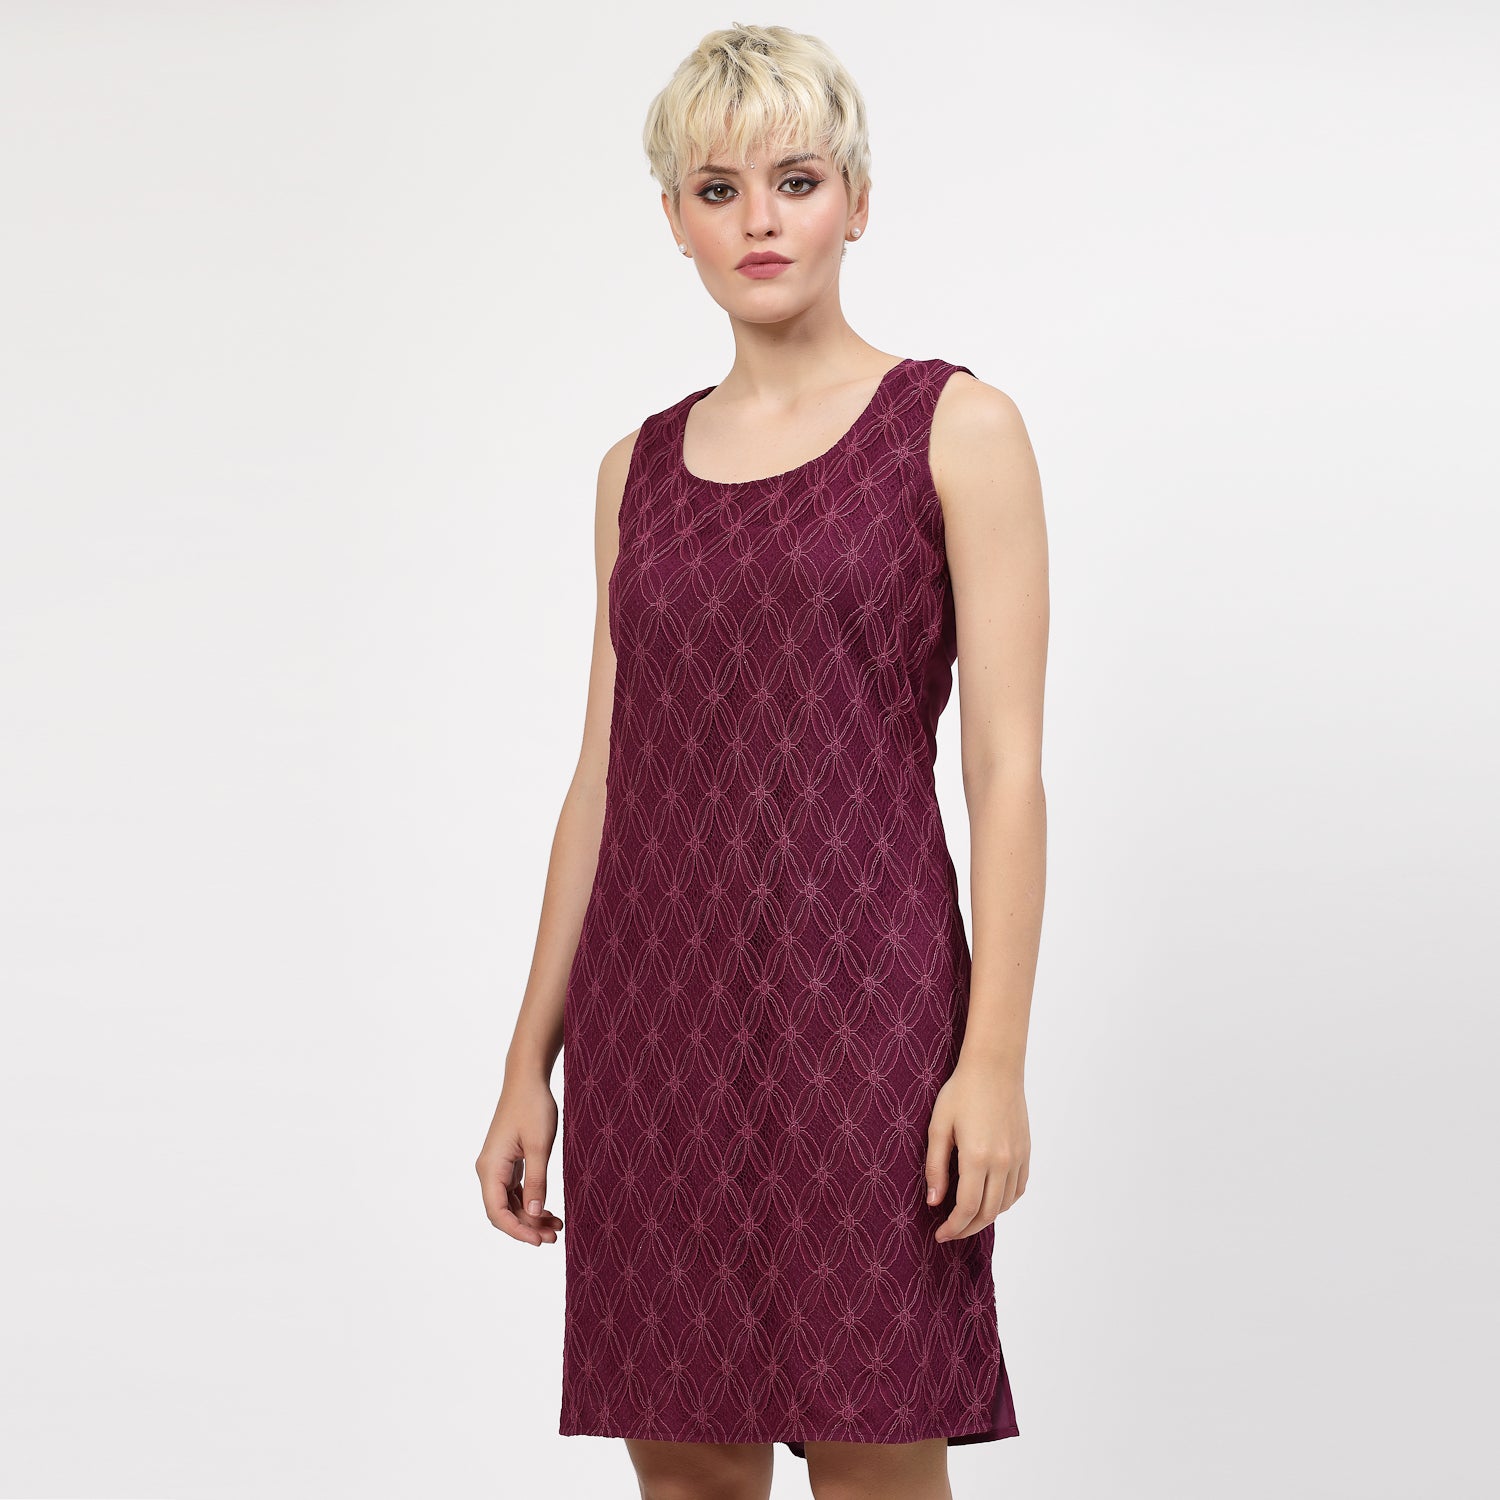 Purple Sleeveless Dress With Lace Fabric